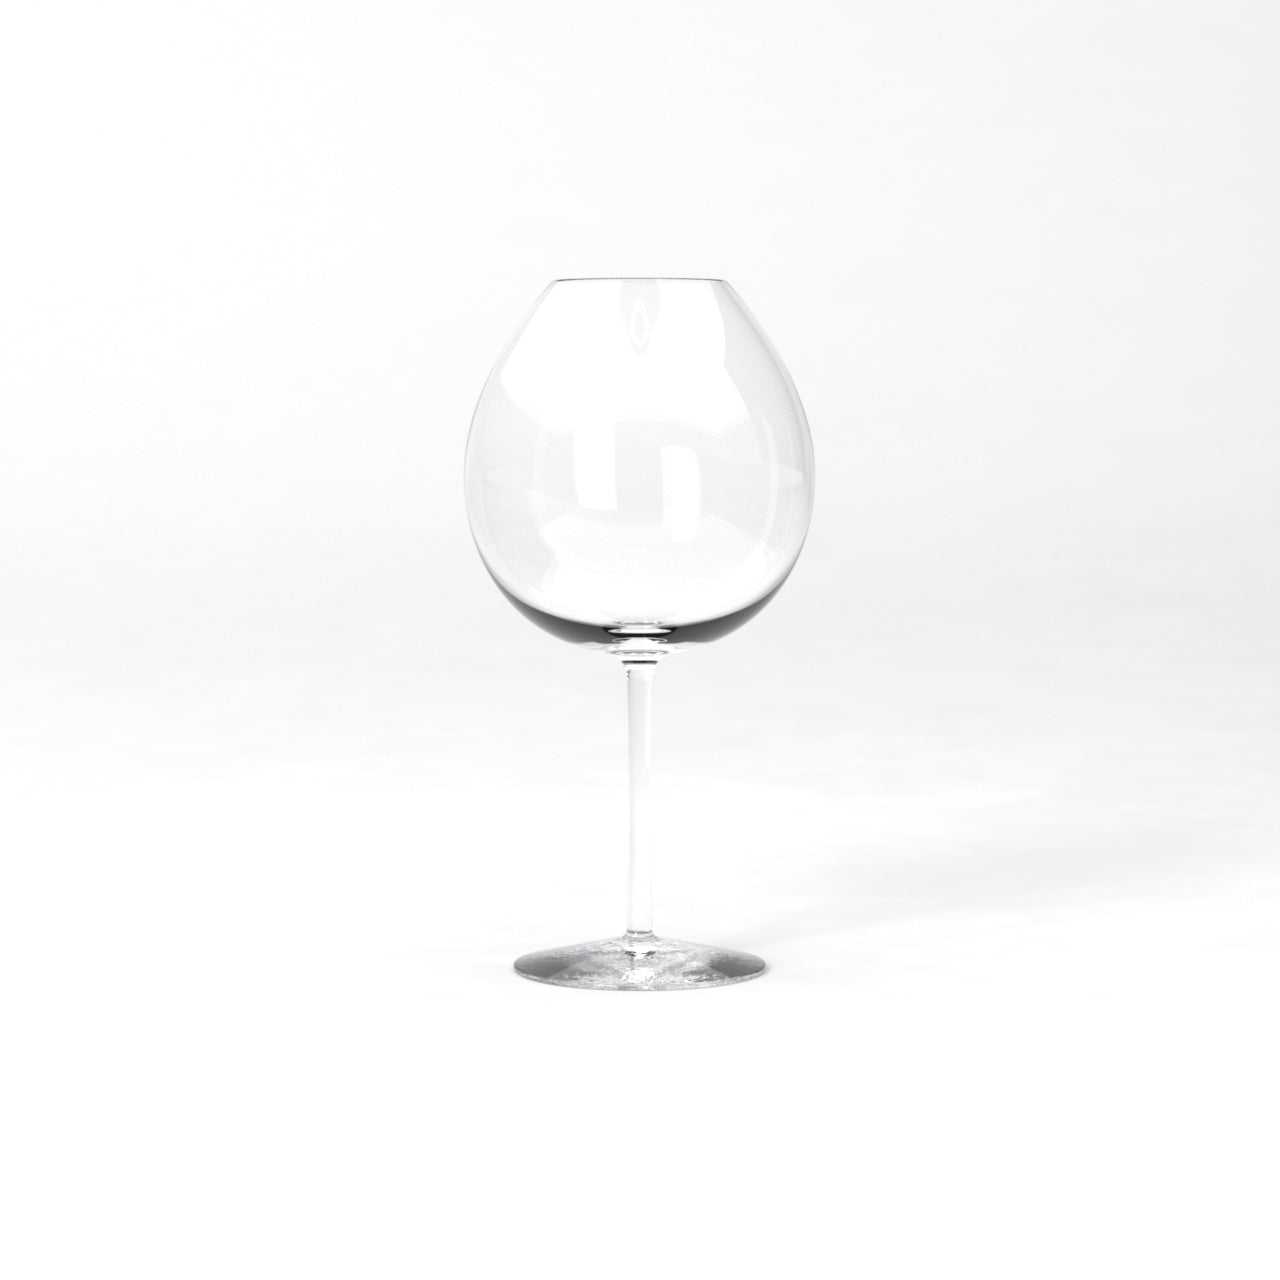 Richard Juhlin red wine glass